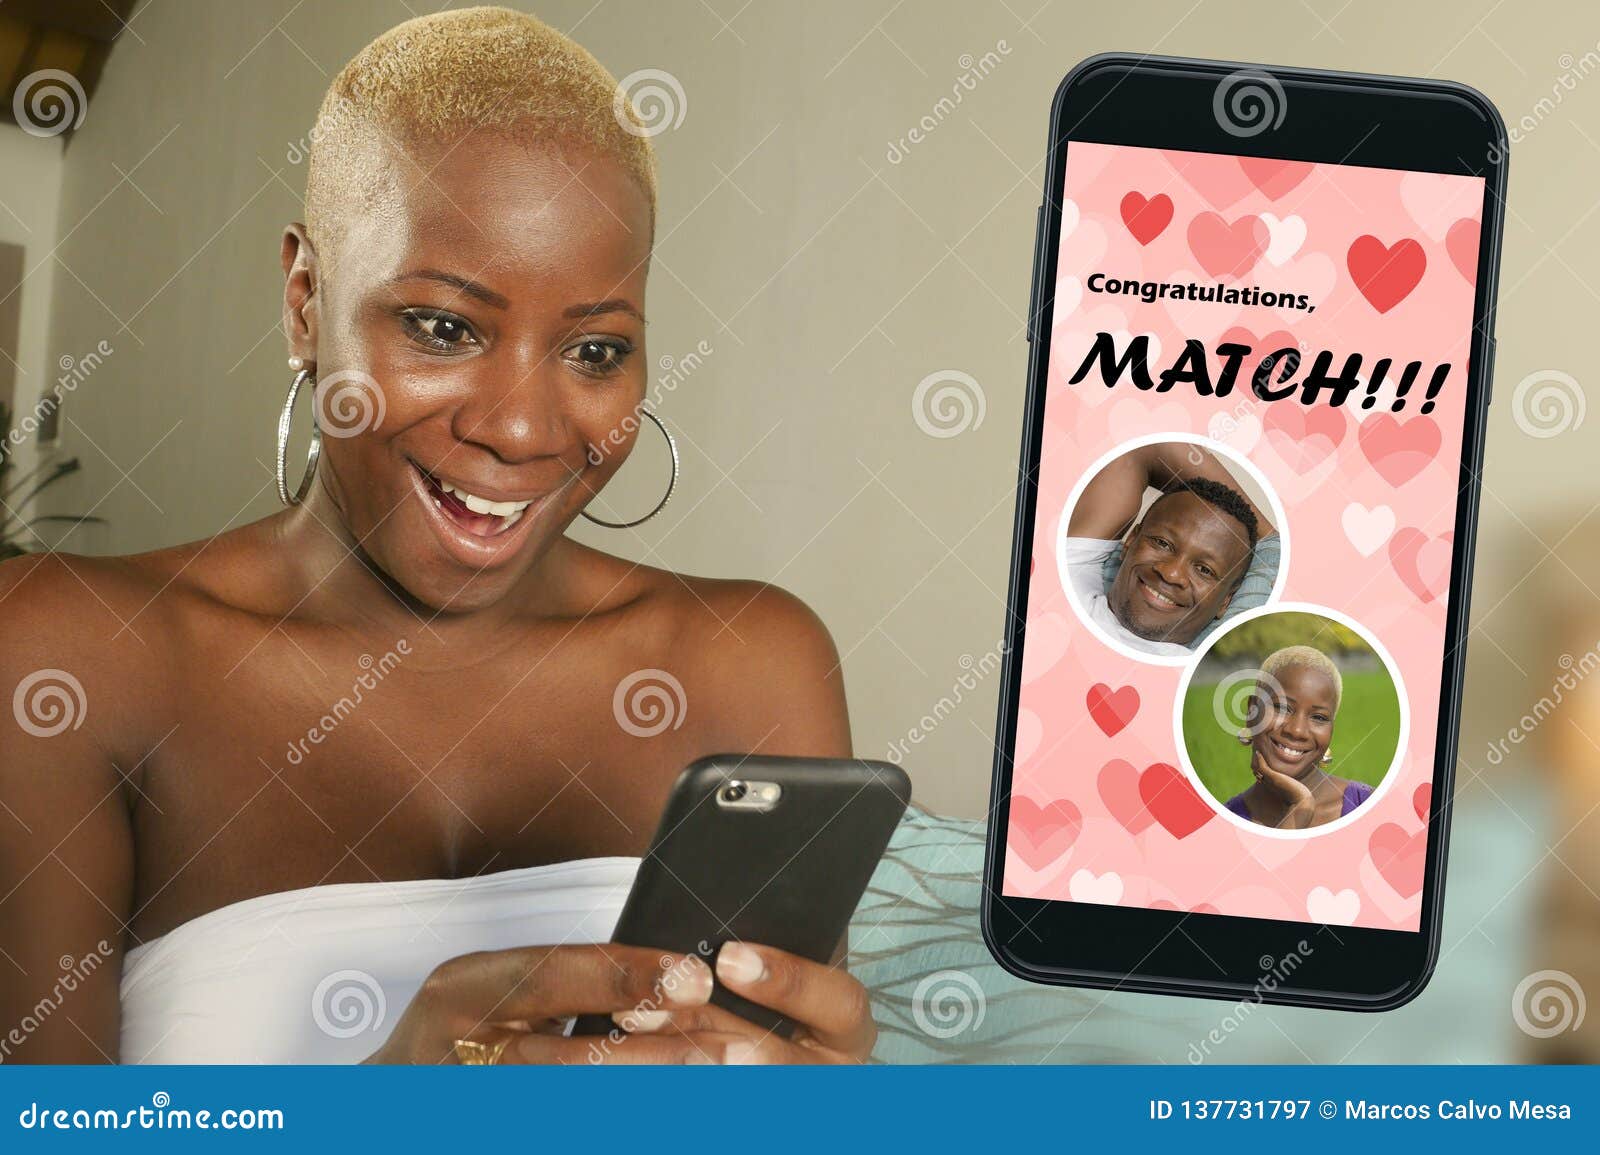 black american dating online